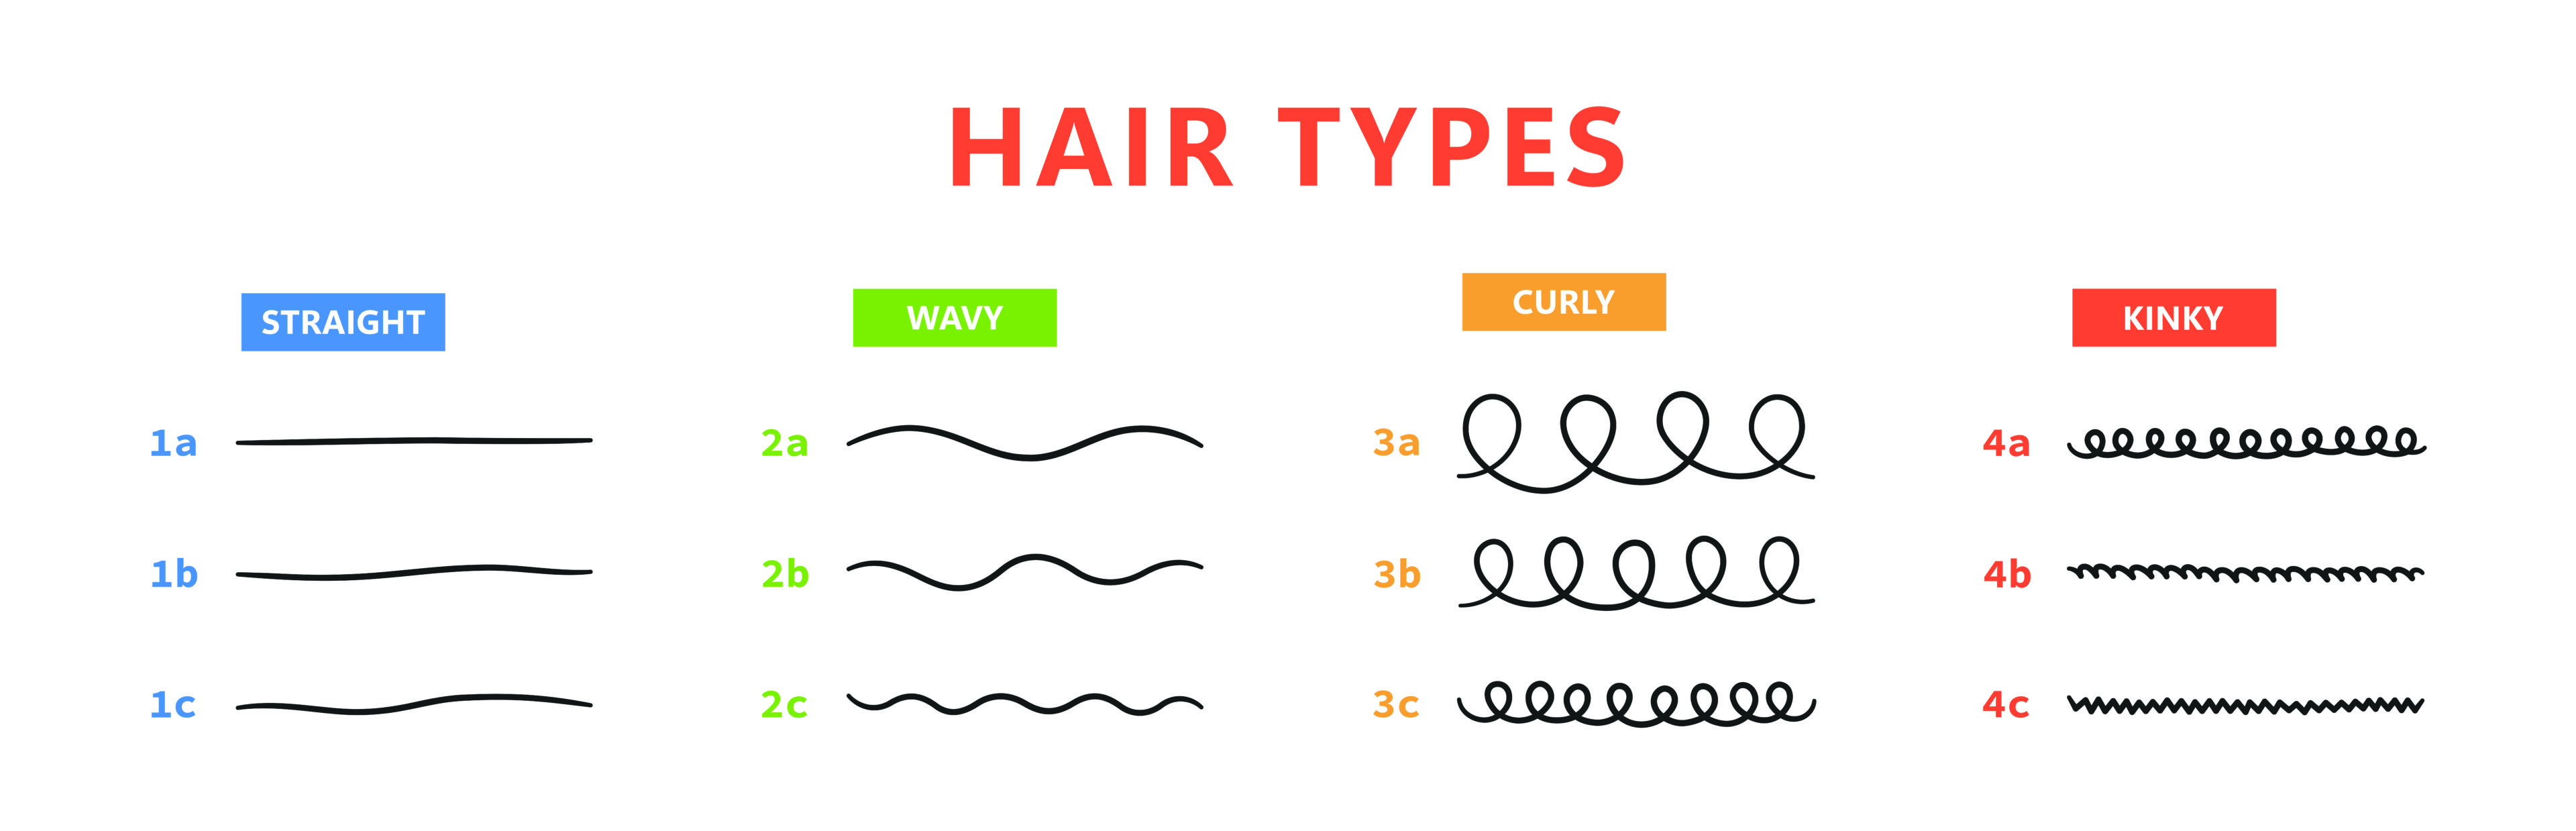 Comparison Hair Type